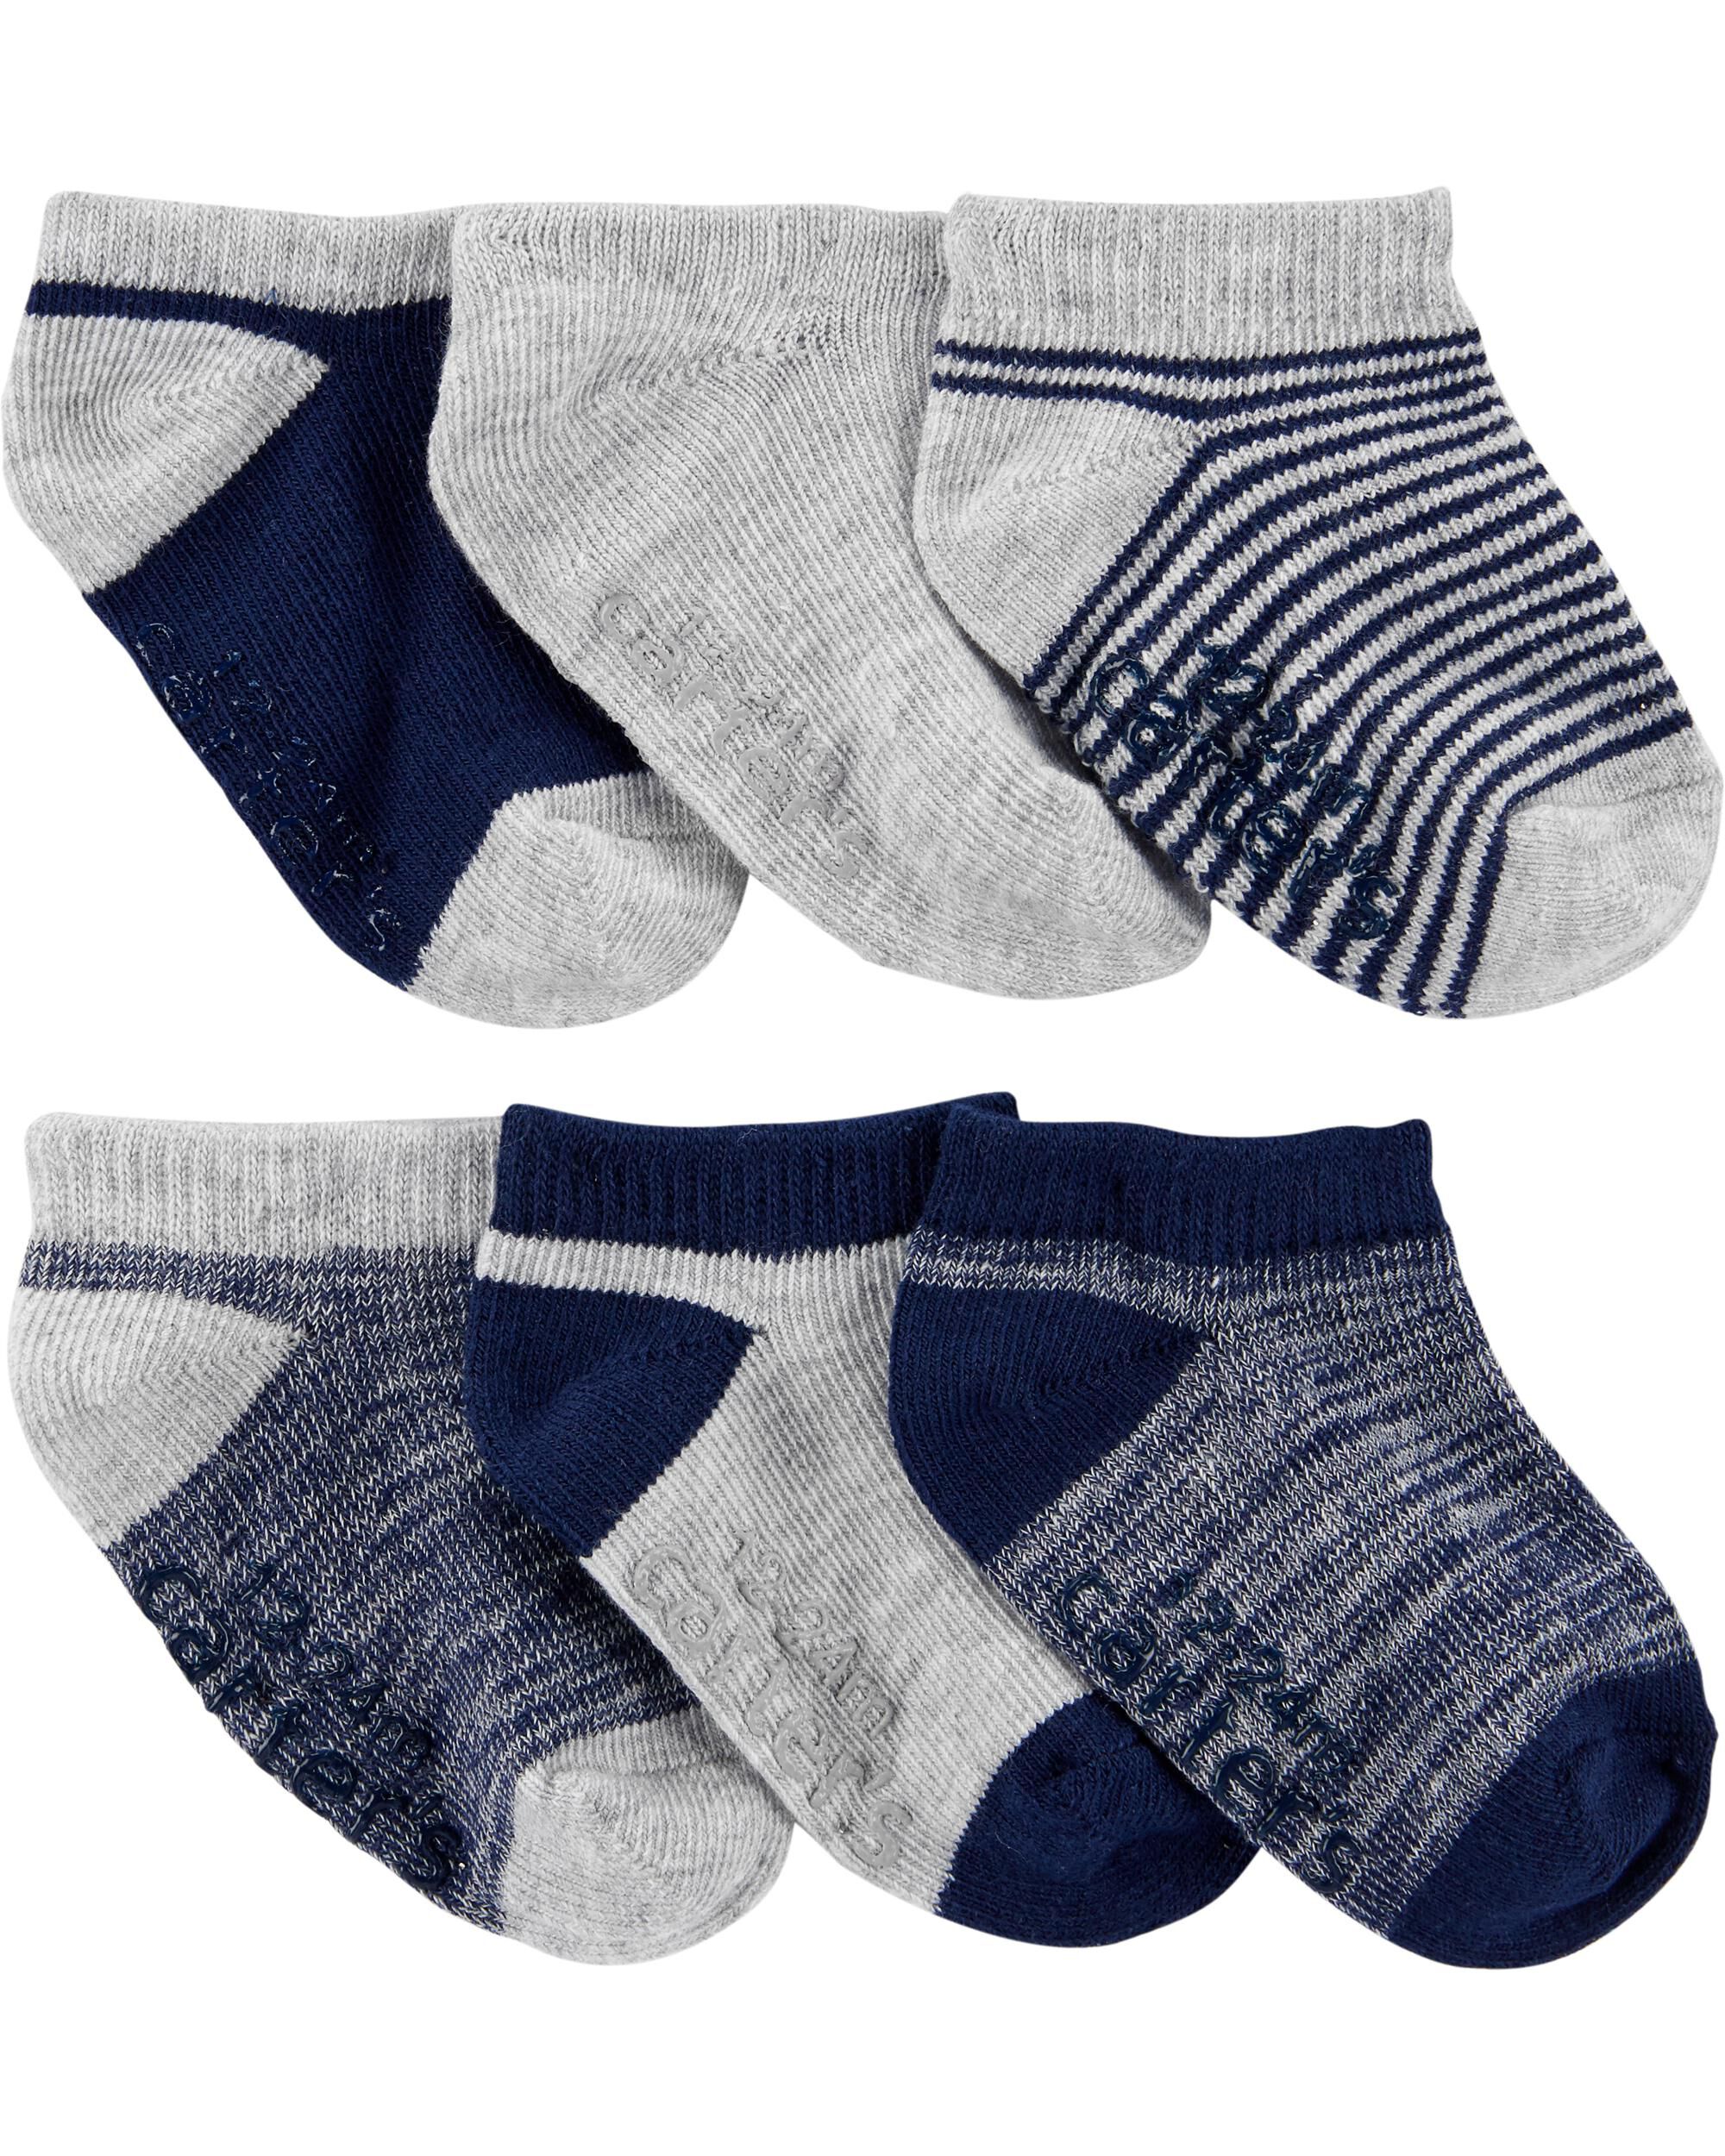 12-24M Carter's CR03405 6-Pack Baby Boy's Terry Cuff Socks Stripes/Navy/Grey